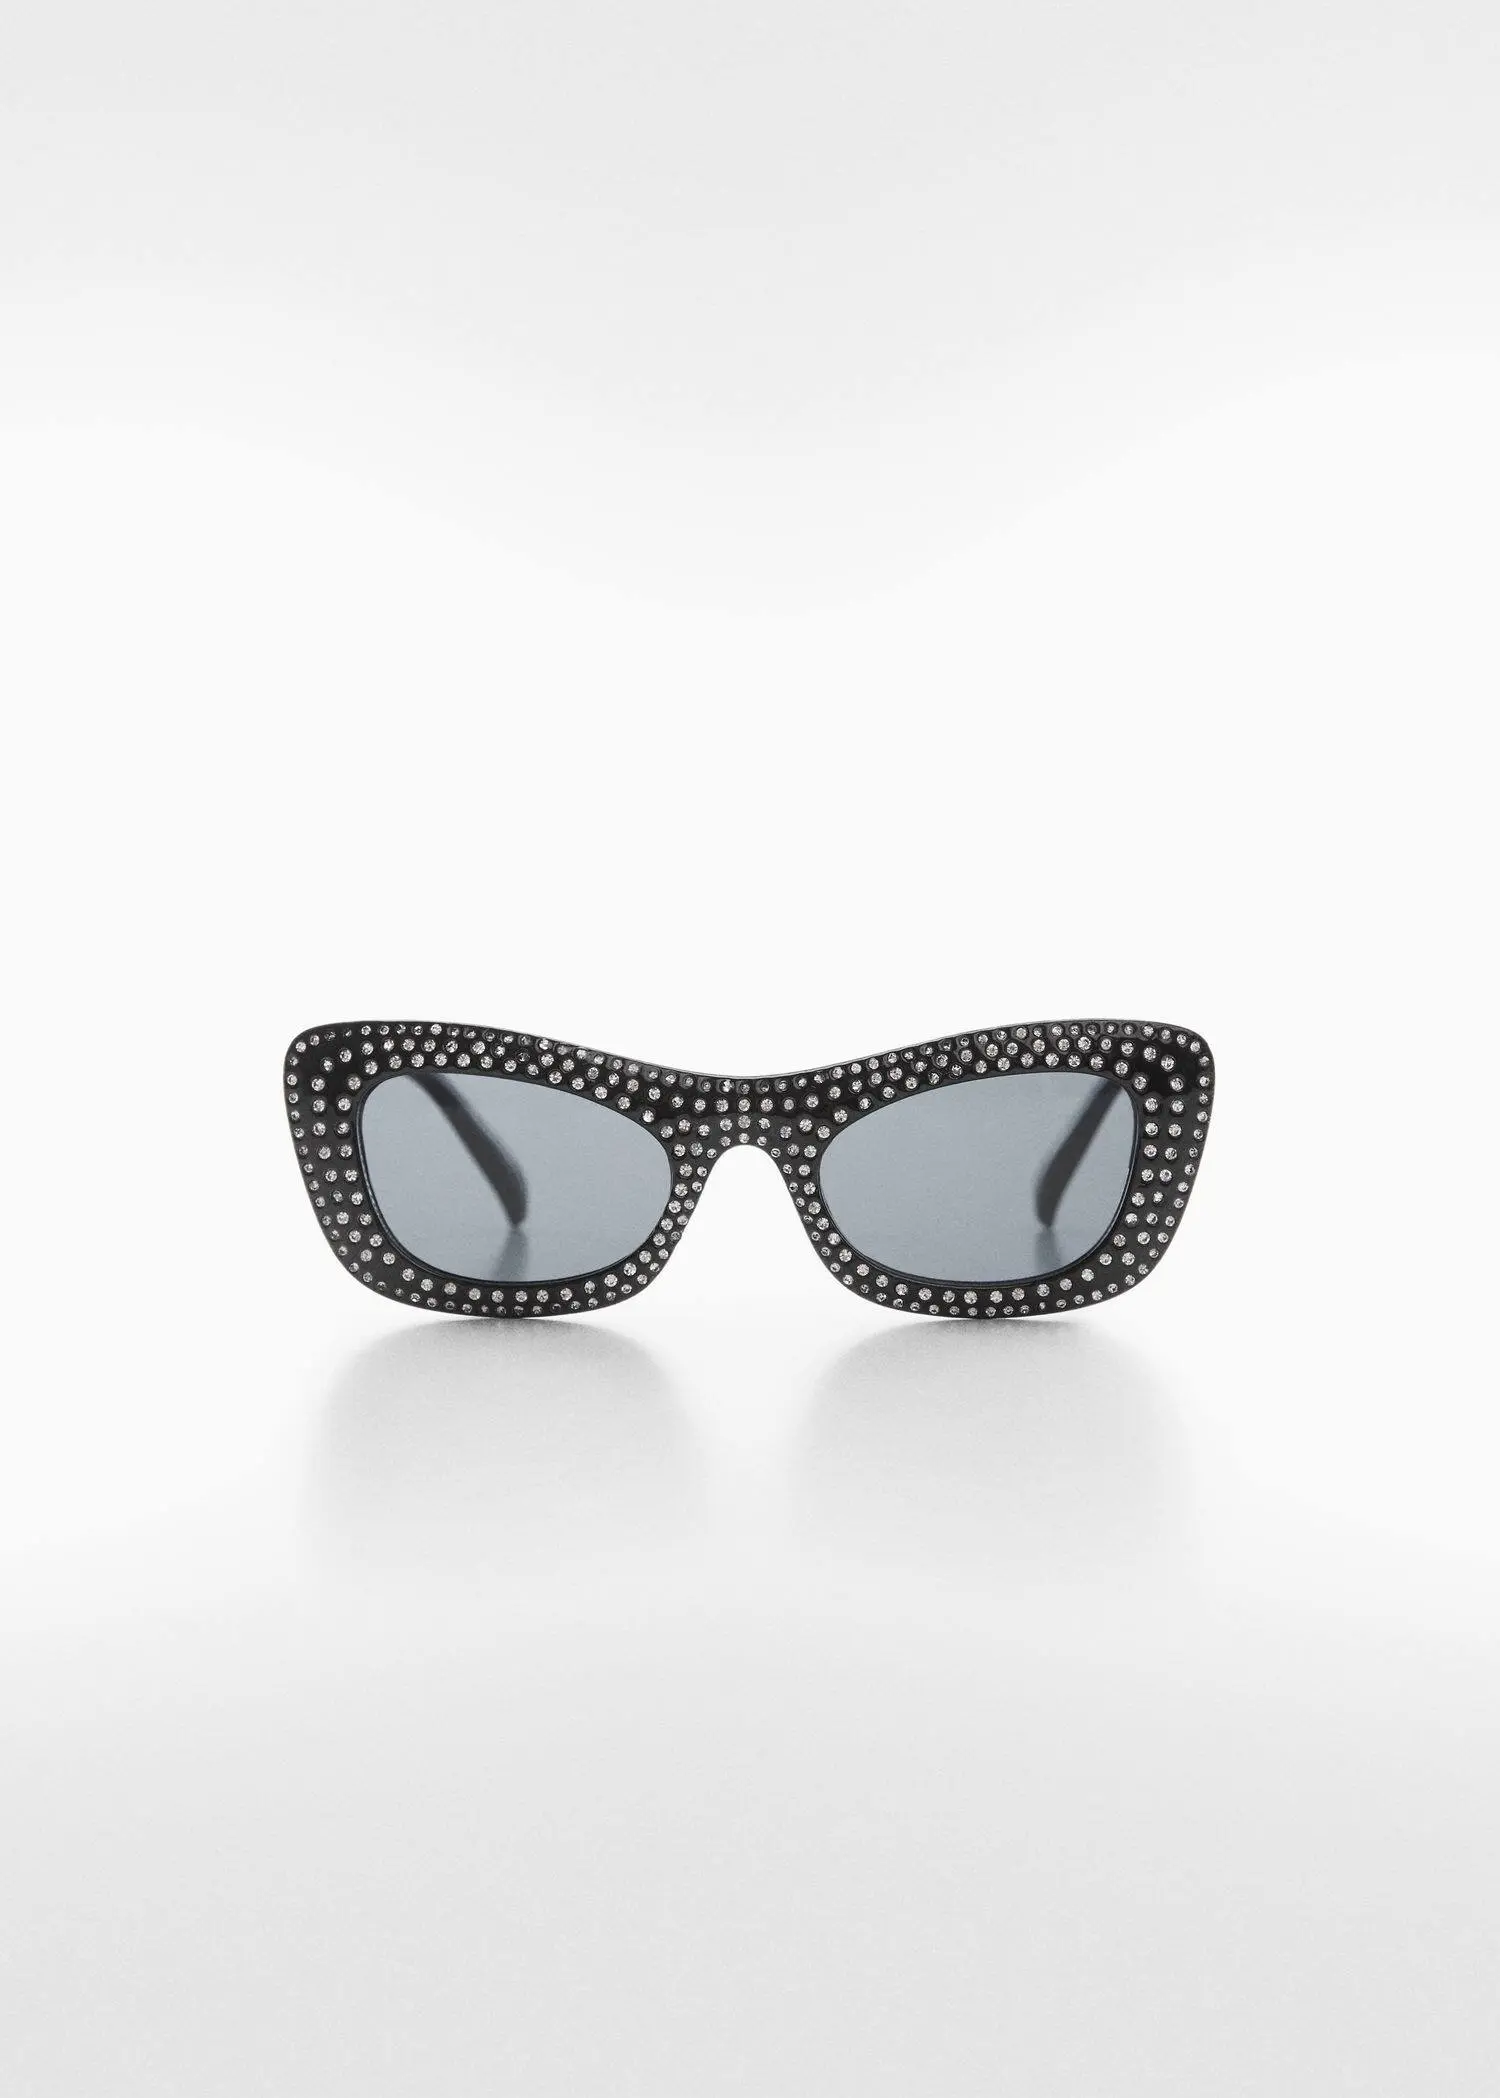 Mango Sunglasses with rhinestone detail. 2